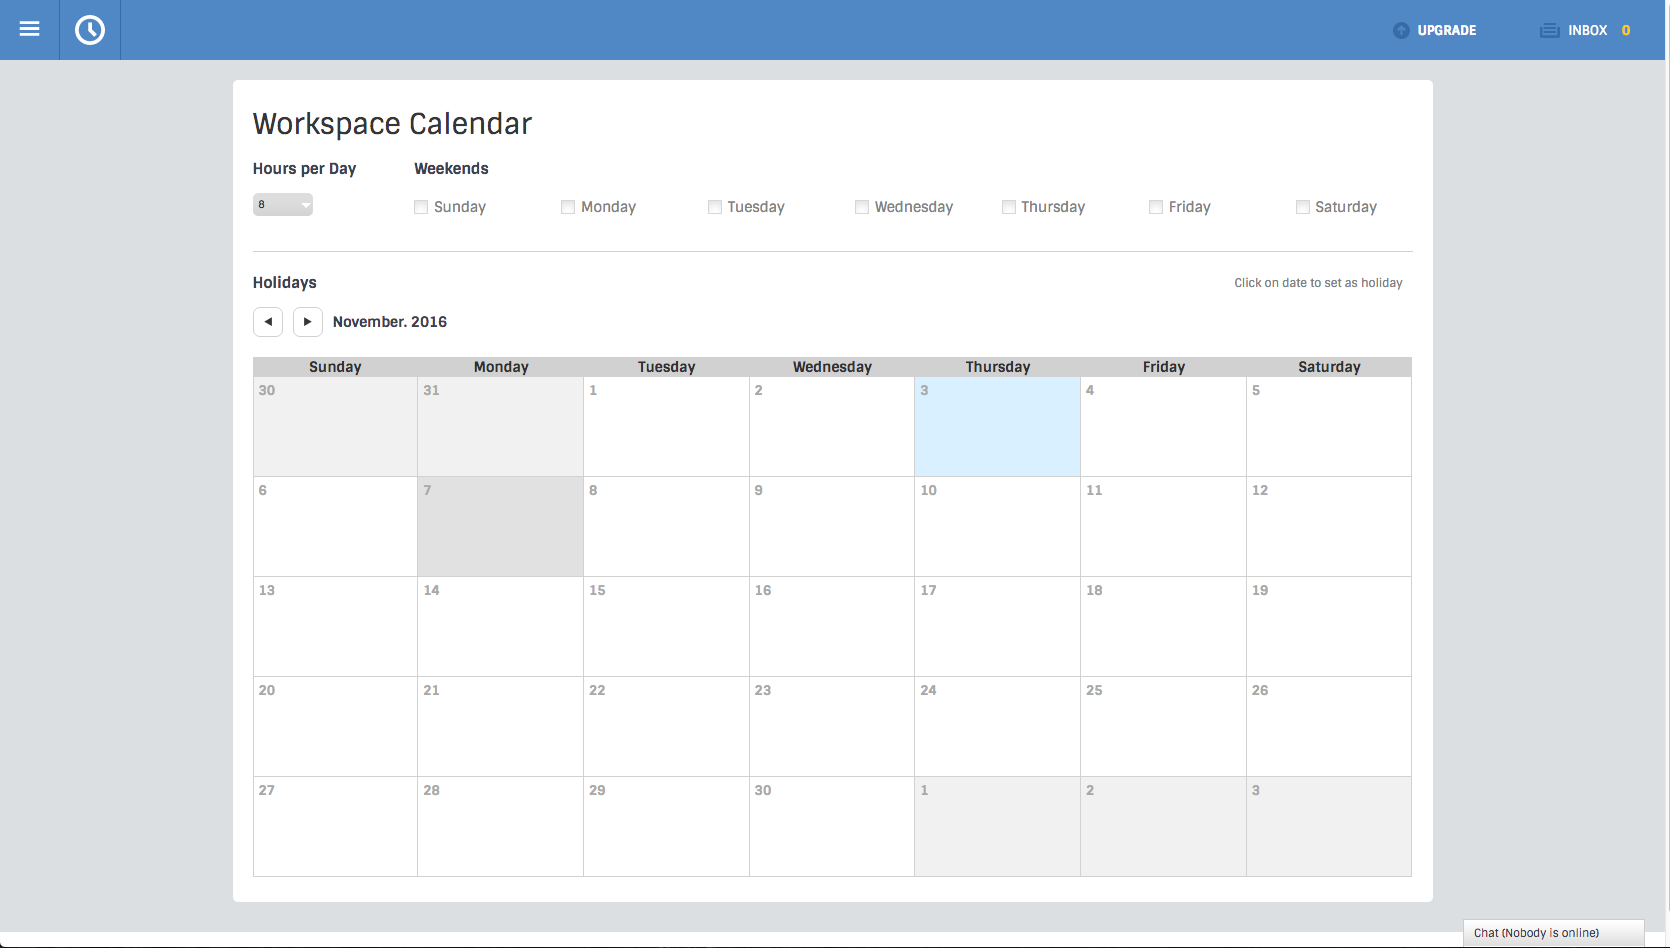 Workspace Calendar page screenshot